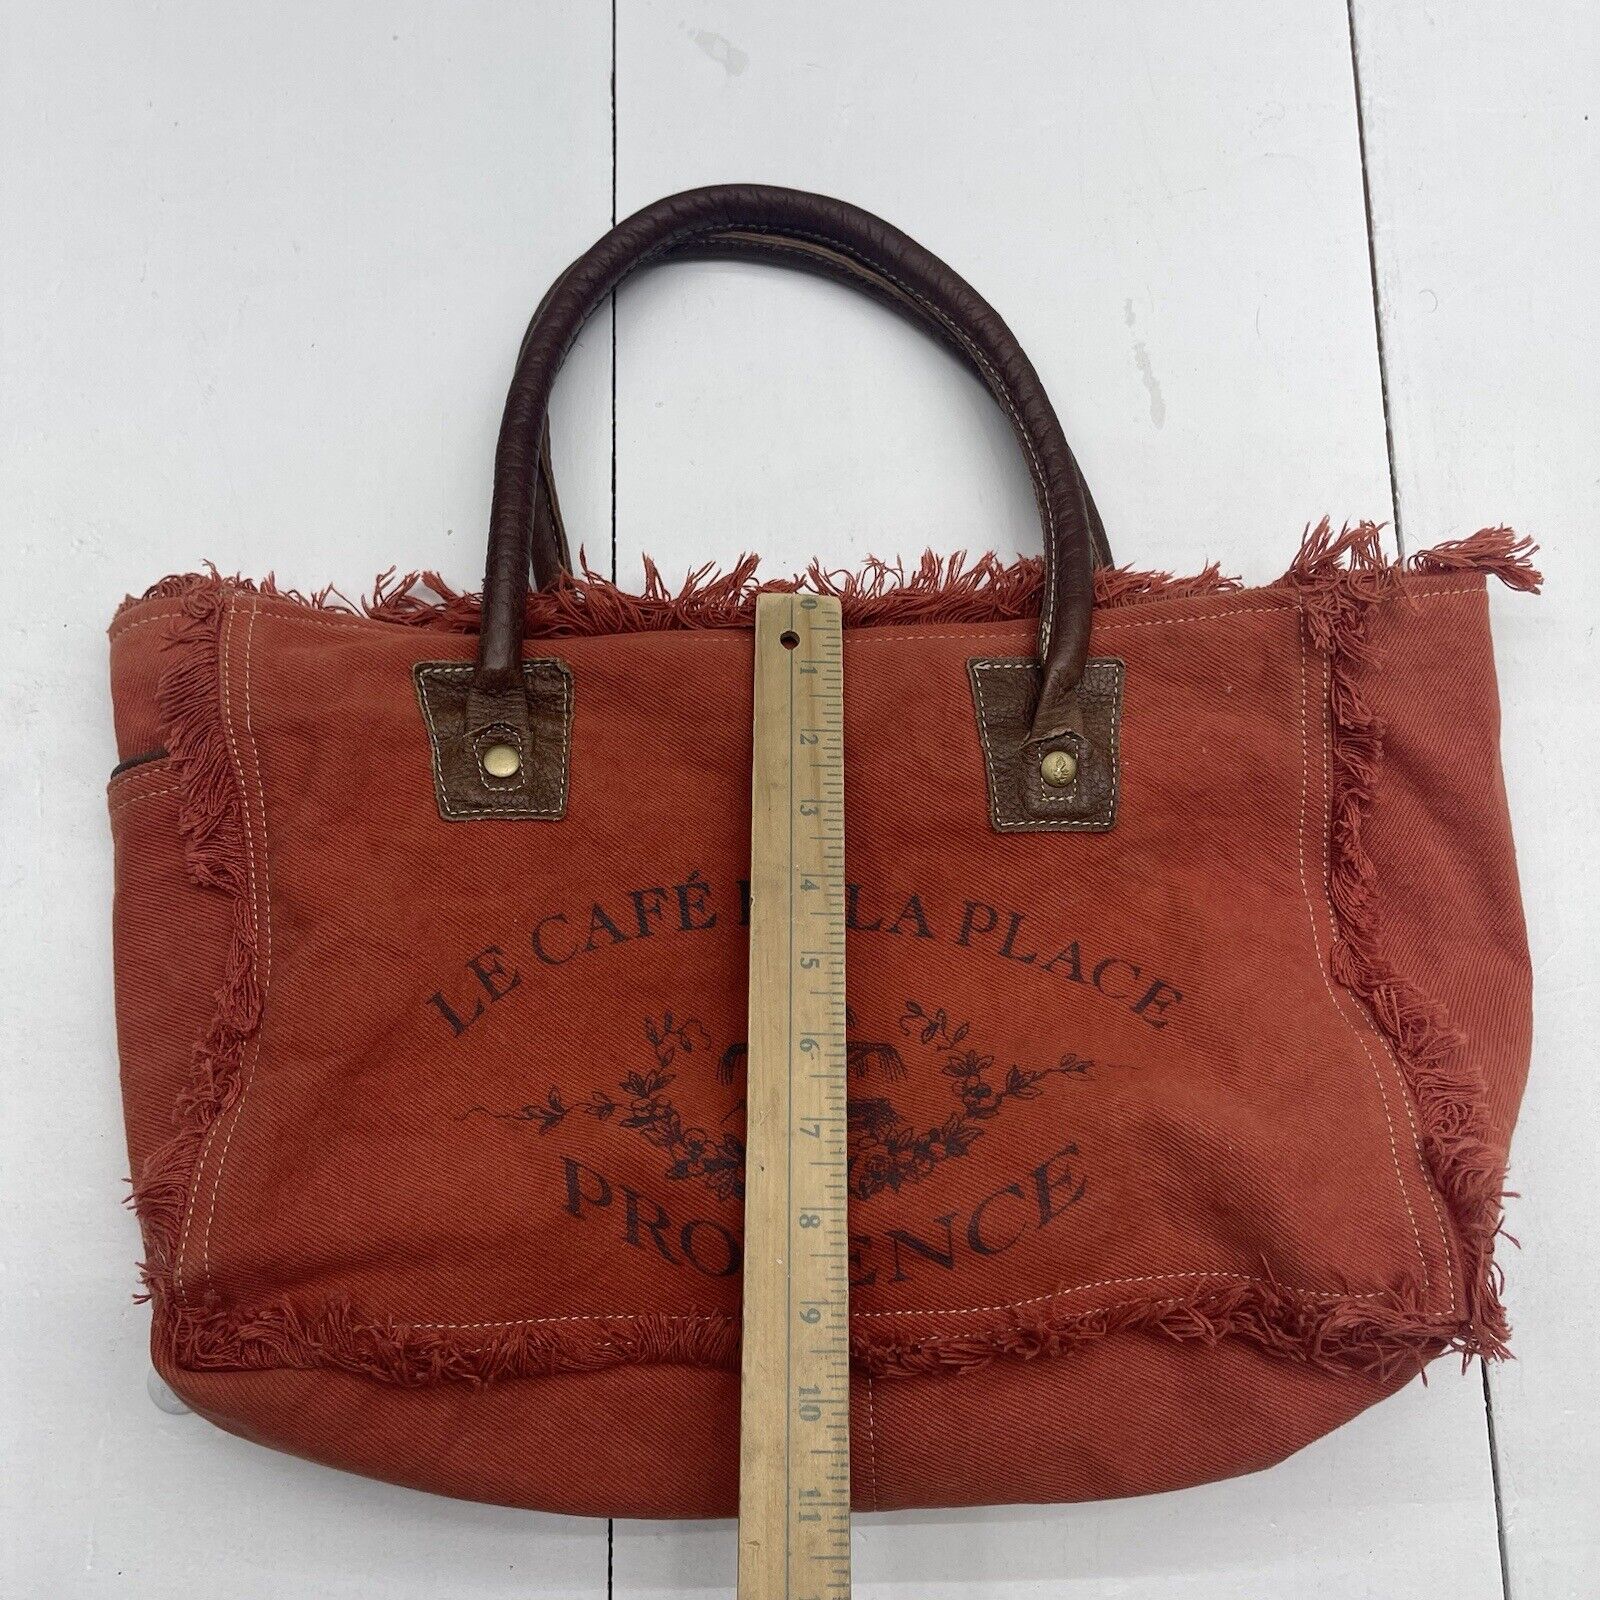 Buy LINDSEY STREET Genuine Leather Shoulder Tote Bag Large Work Purse  Handbag (Red) at Amazon.in